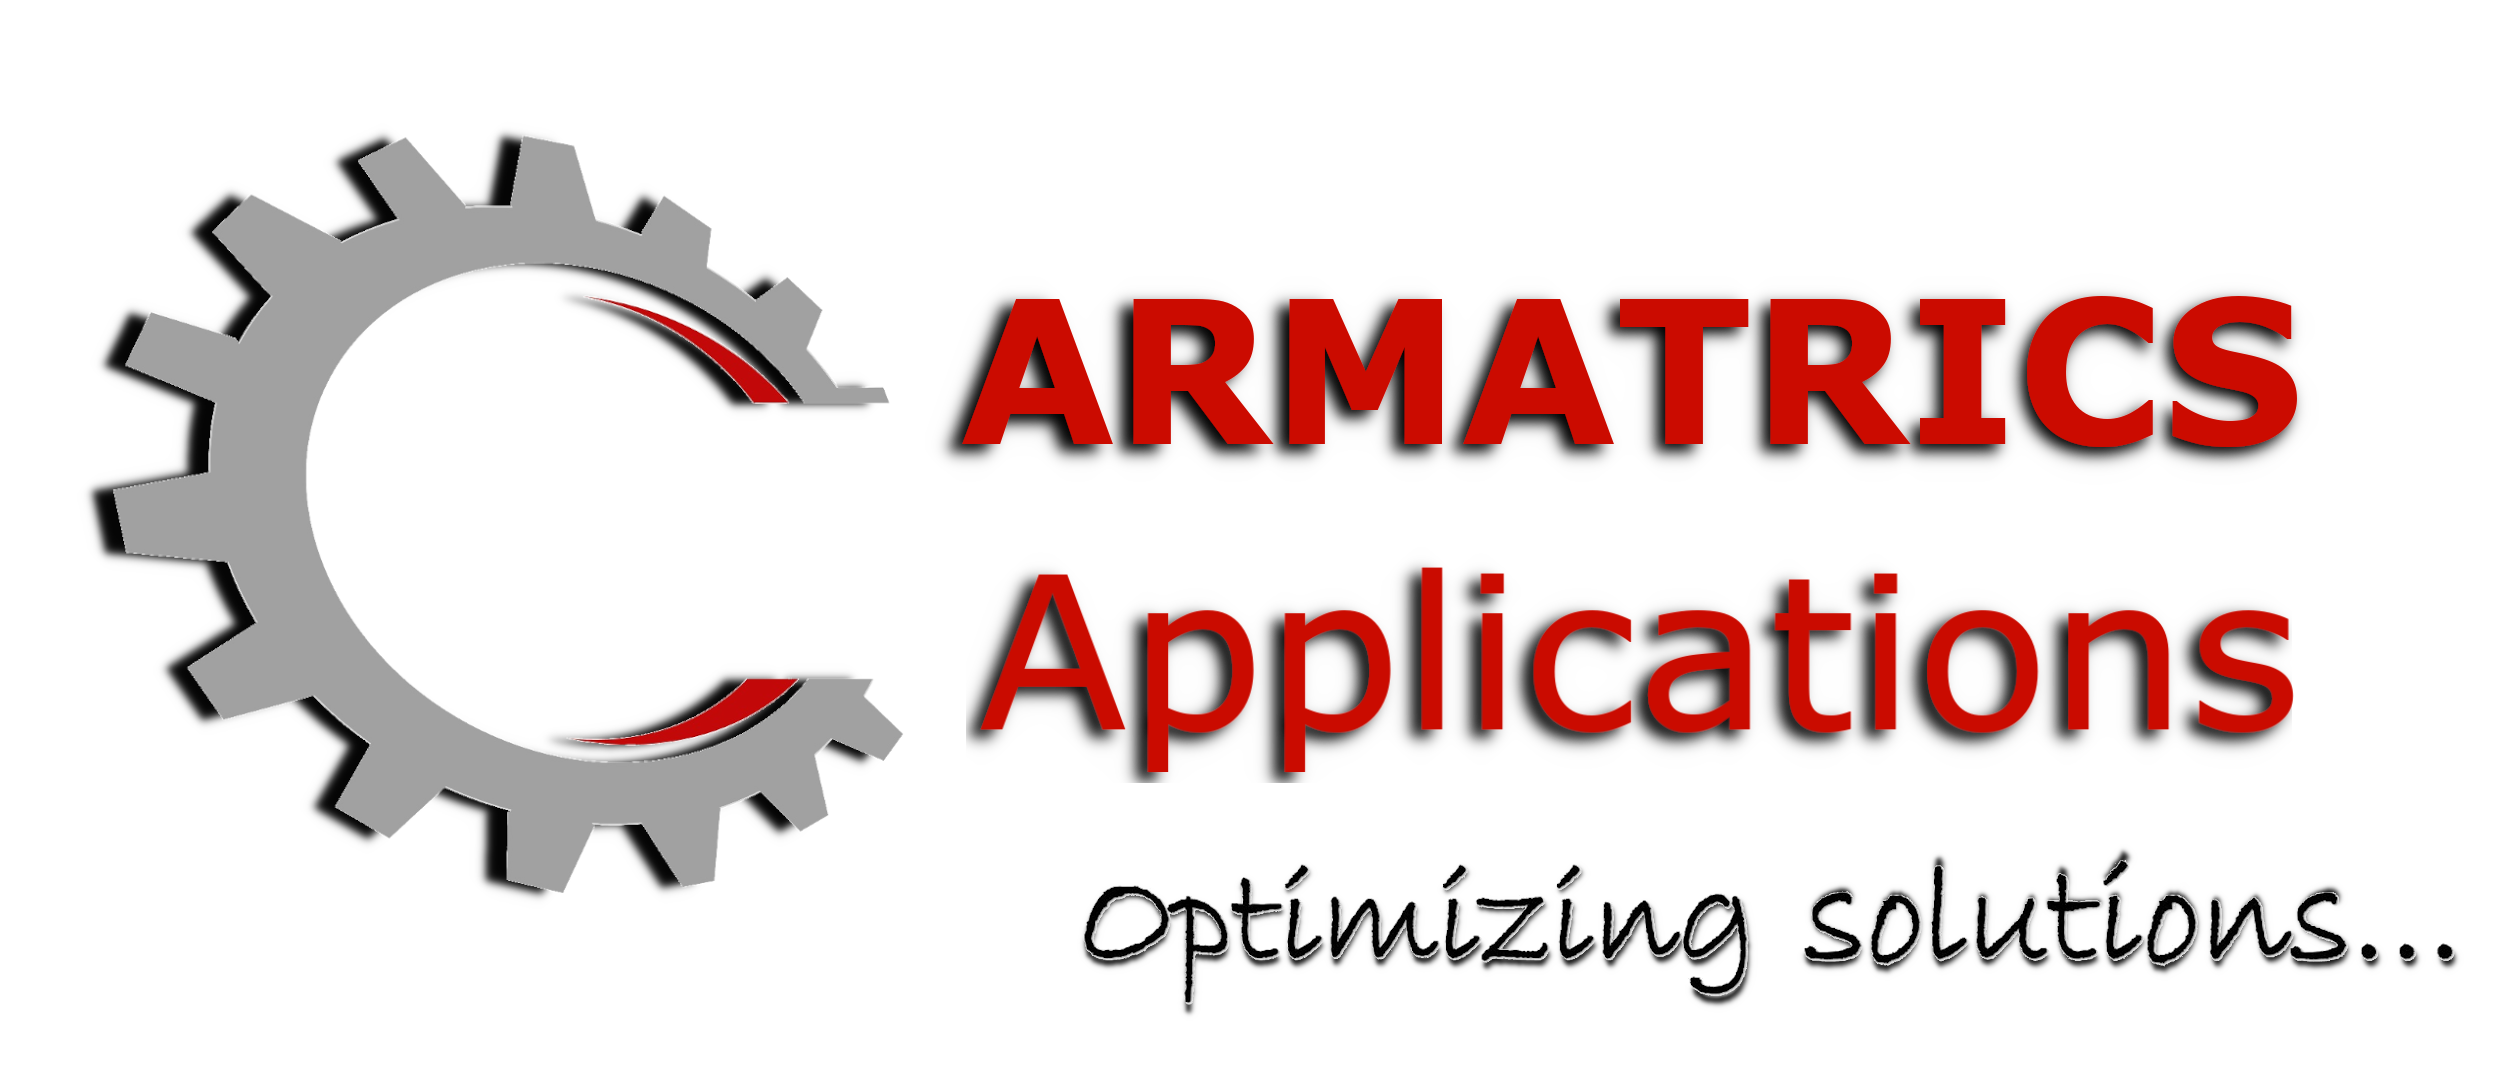 Armatrics Application